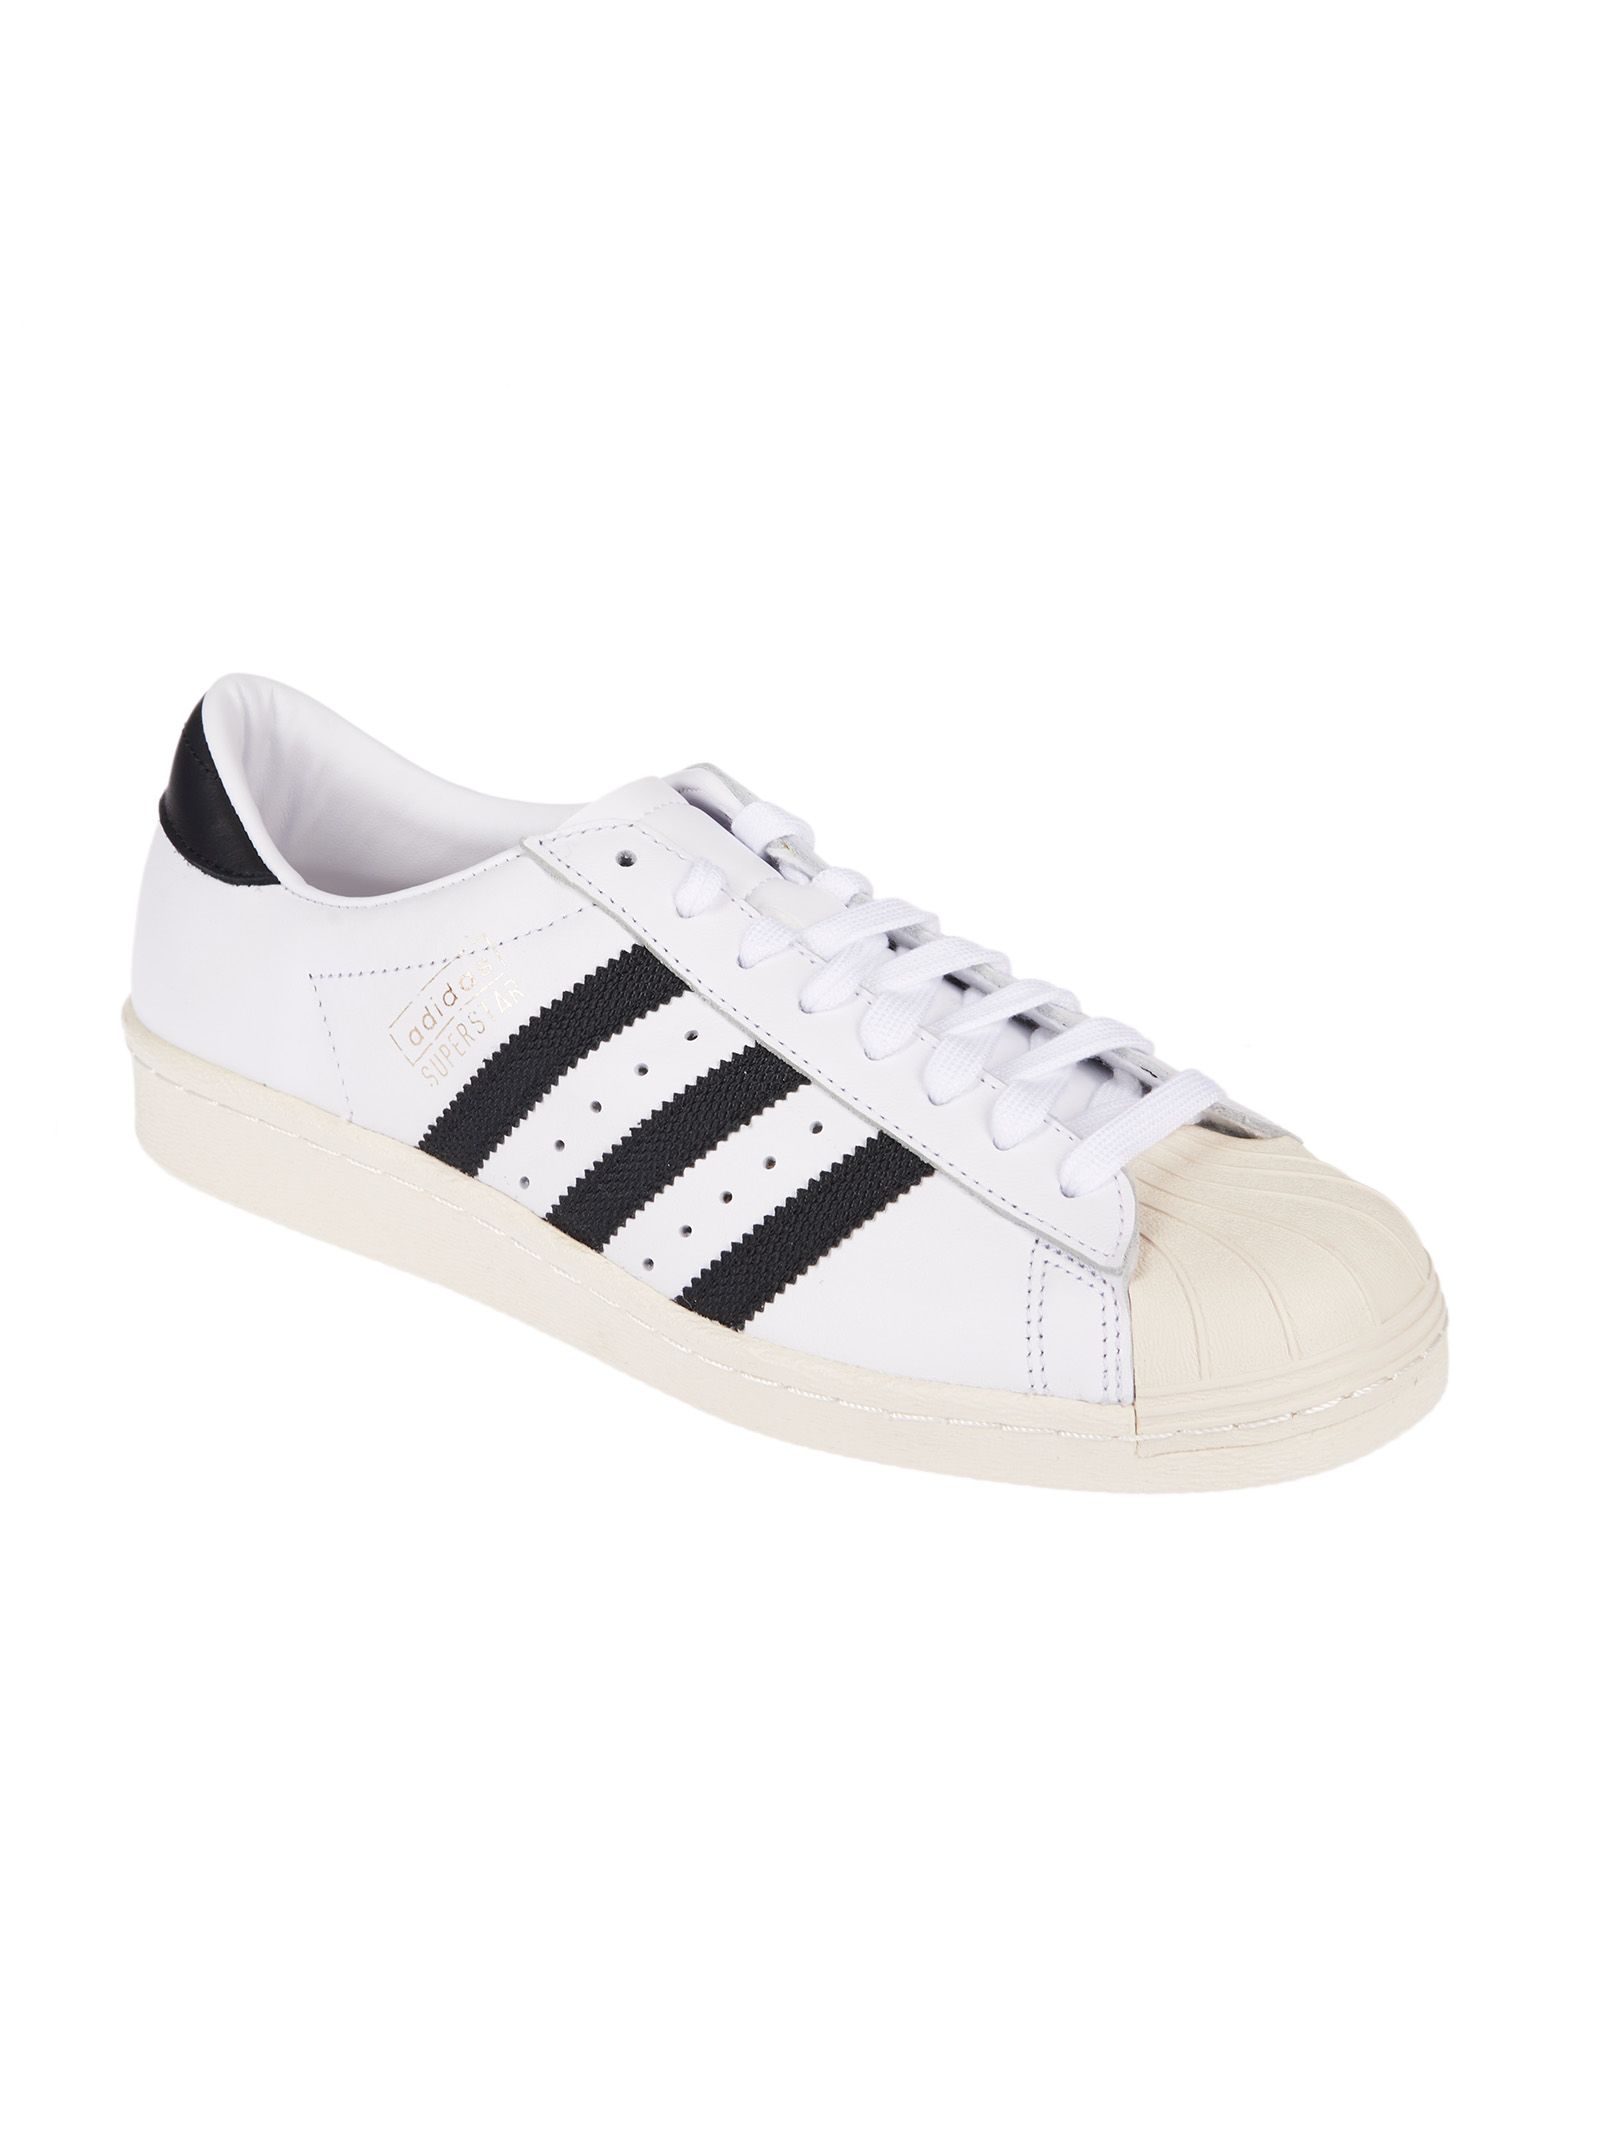 Adidas Originals Adidas Original Superstar Sneakers - white - 10518424 ...